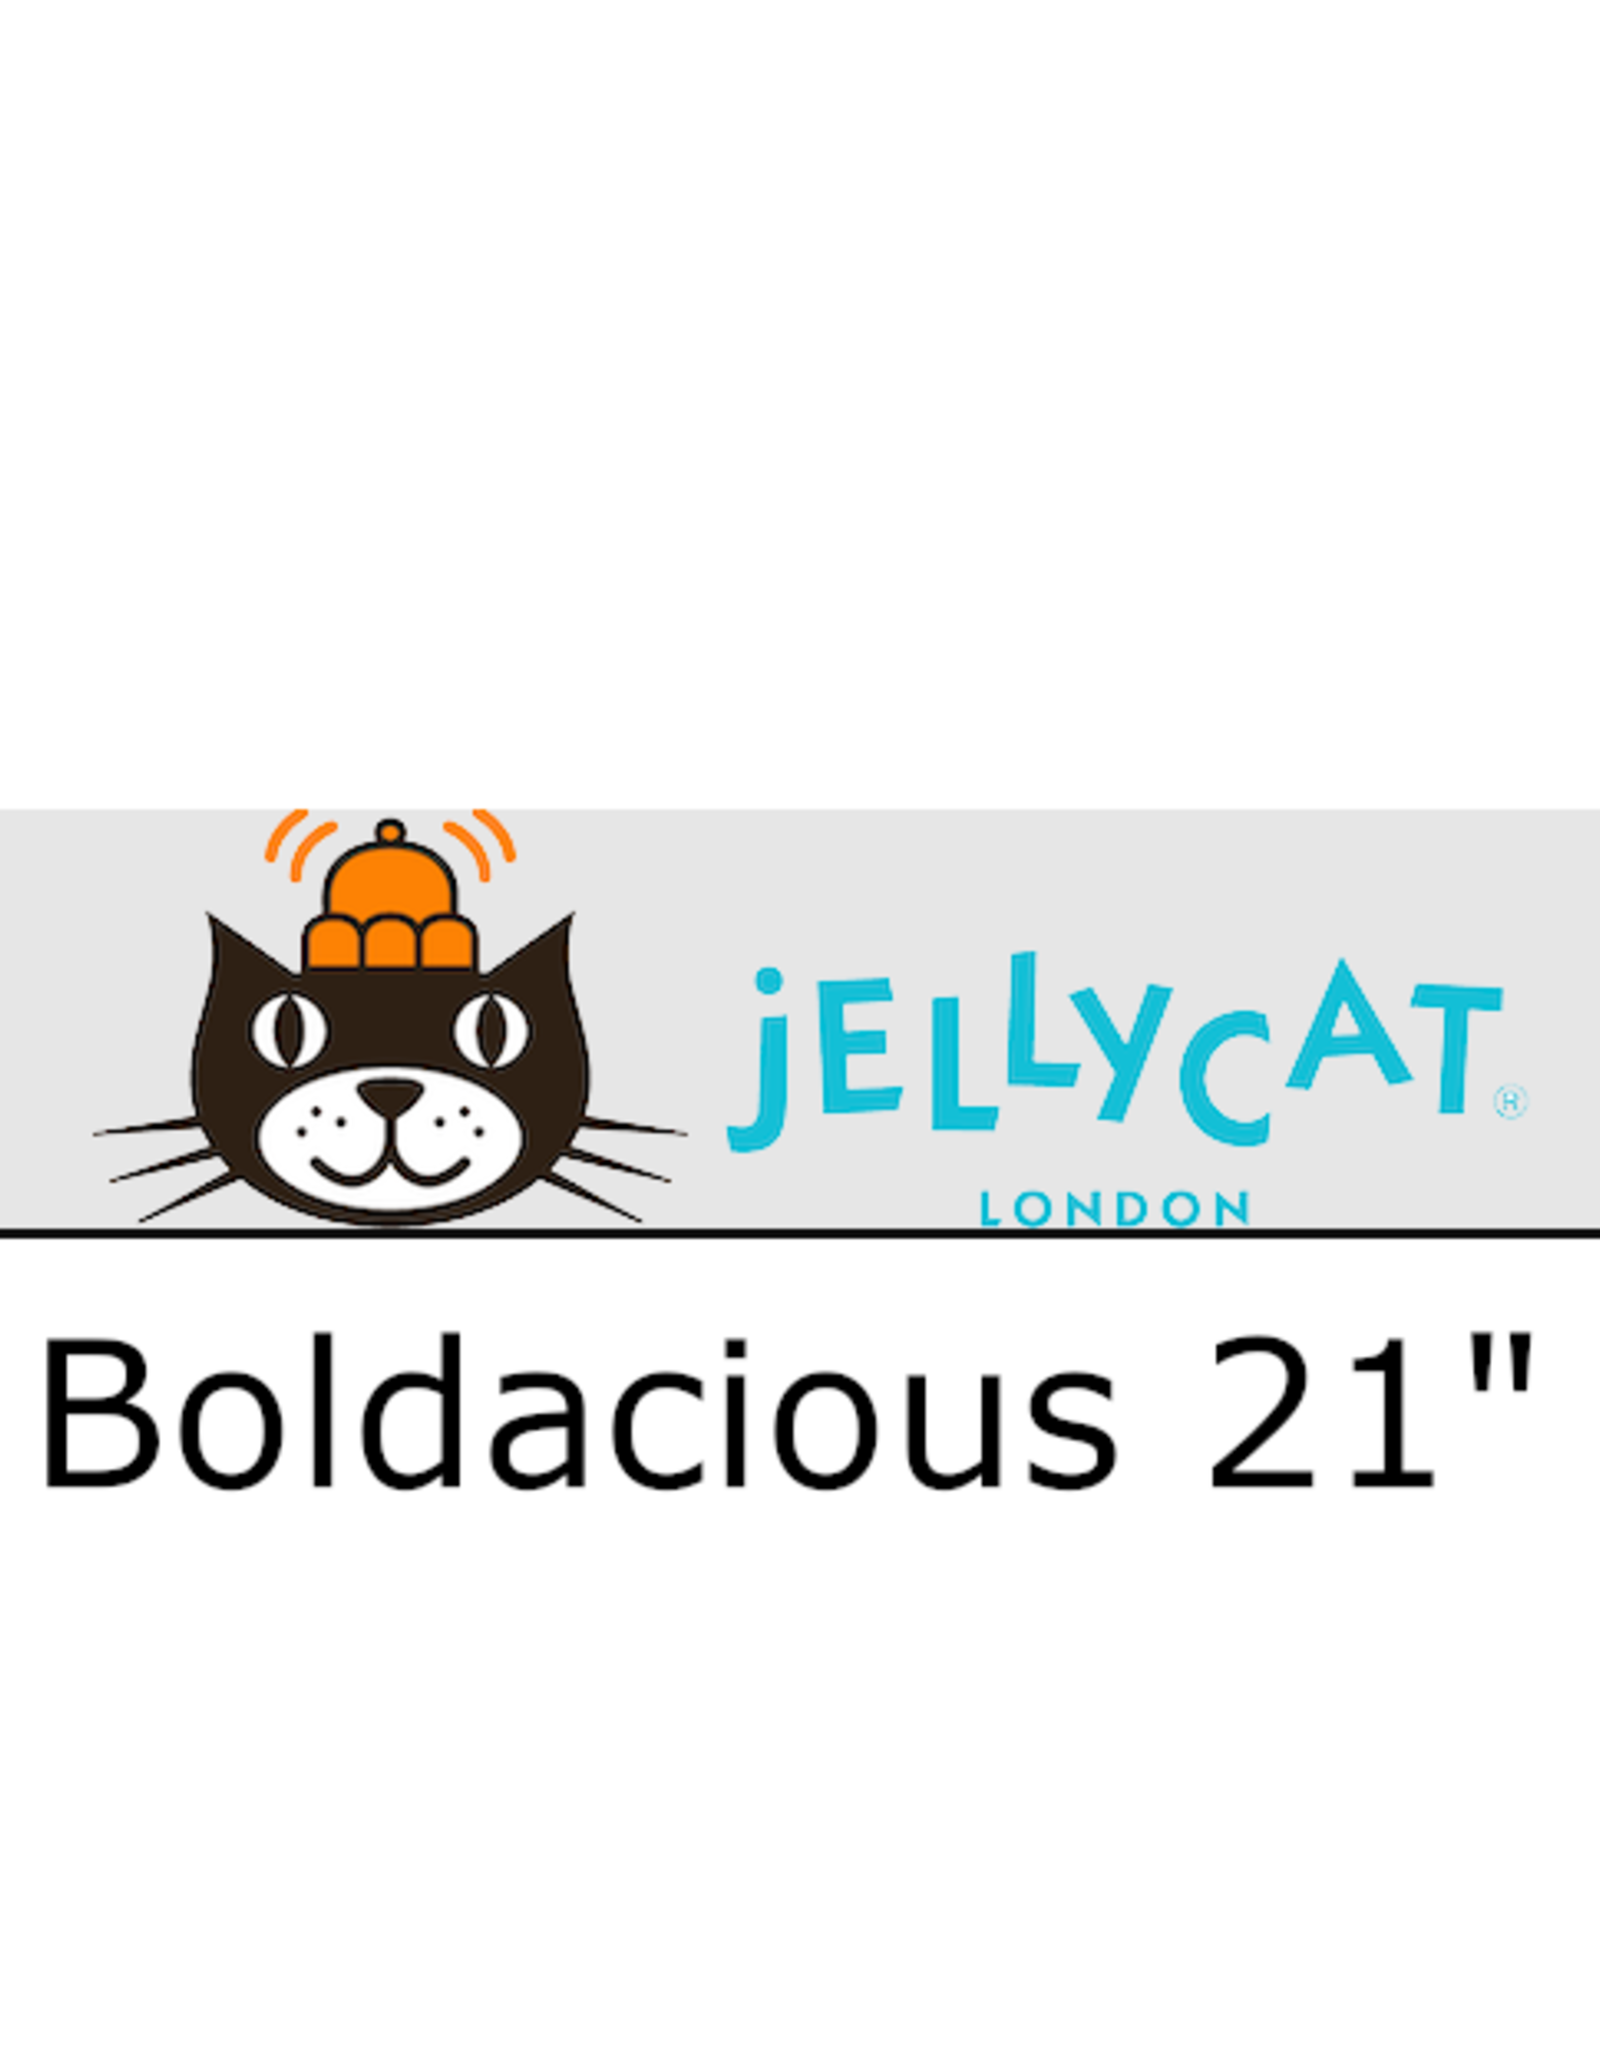 Boldacious 21" Jellycat